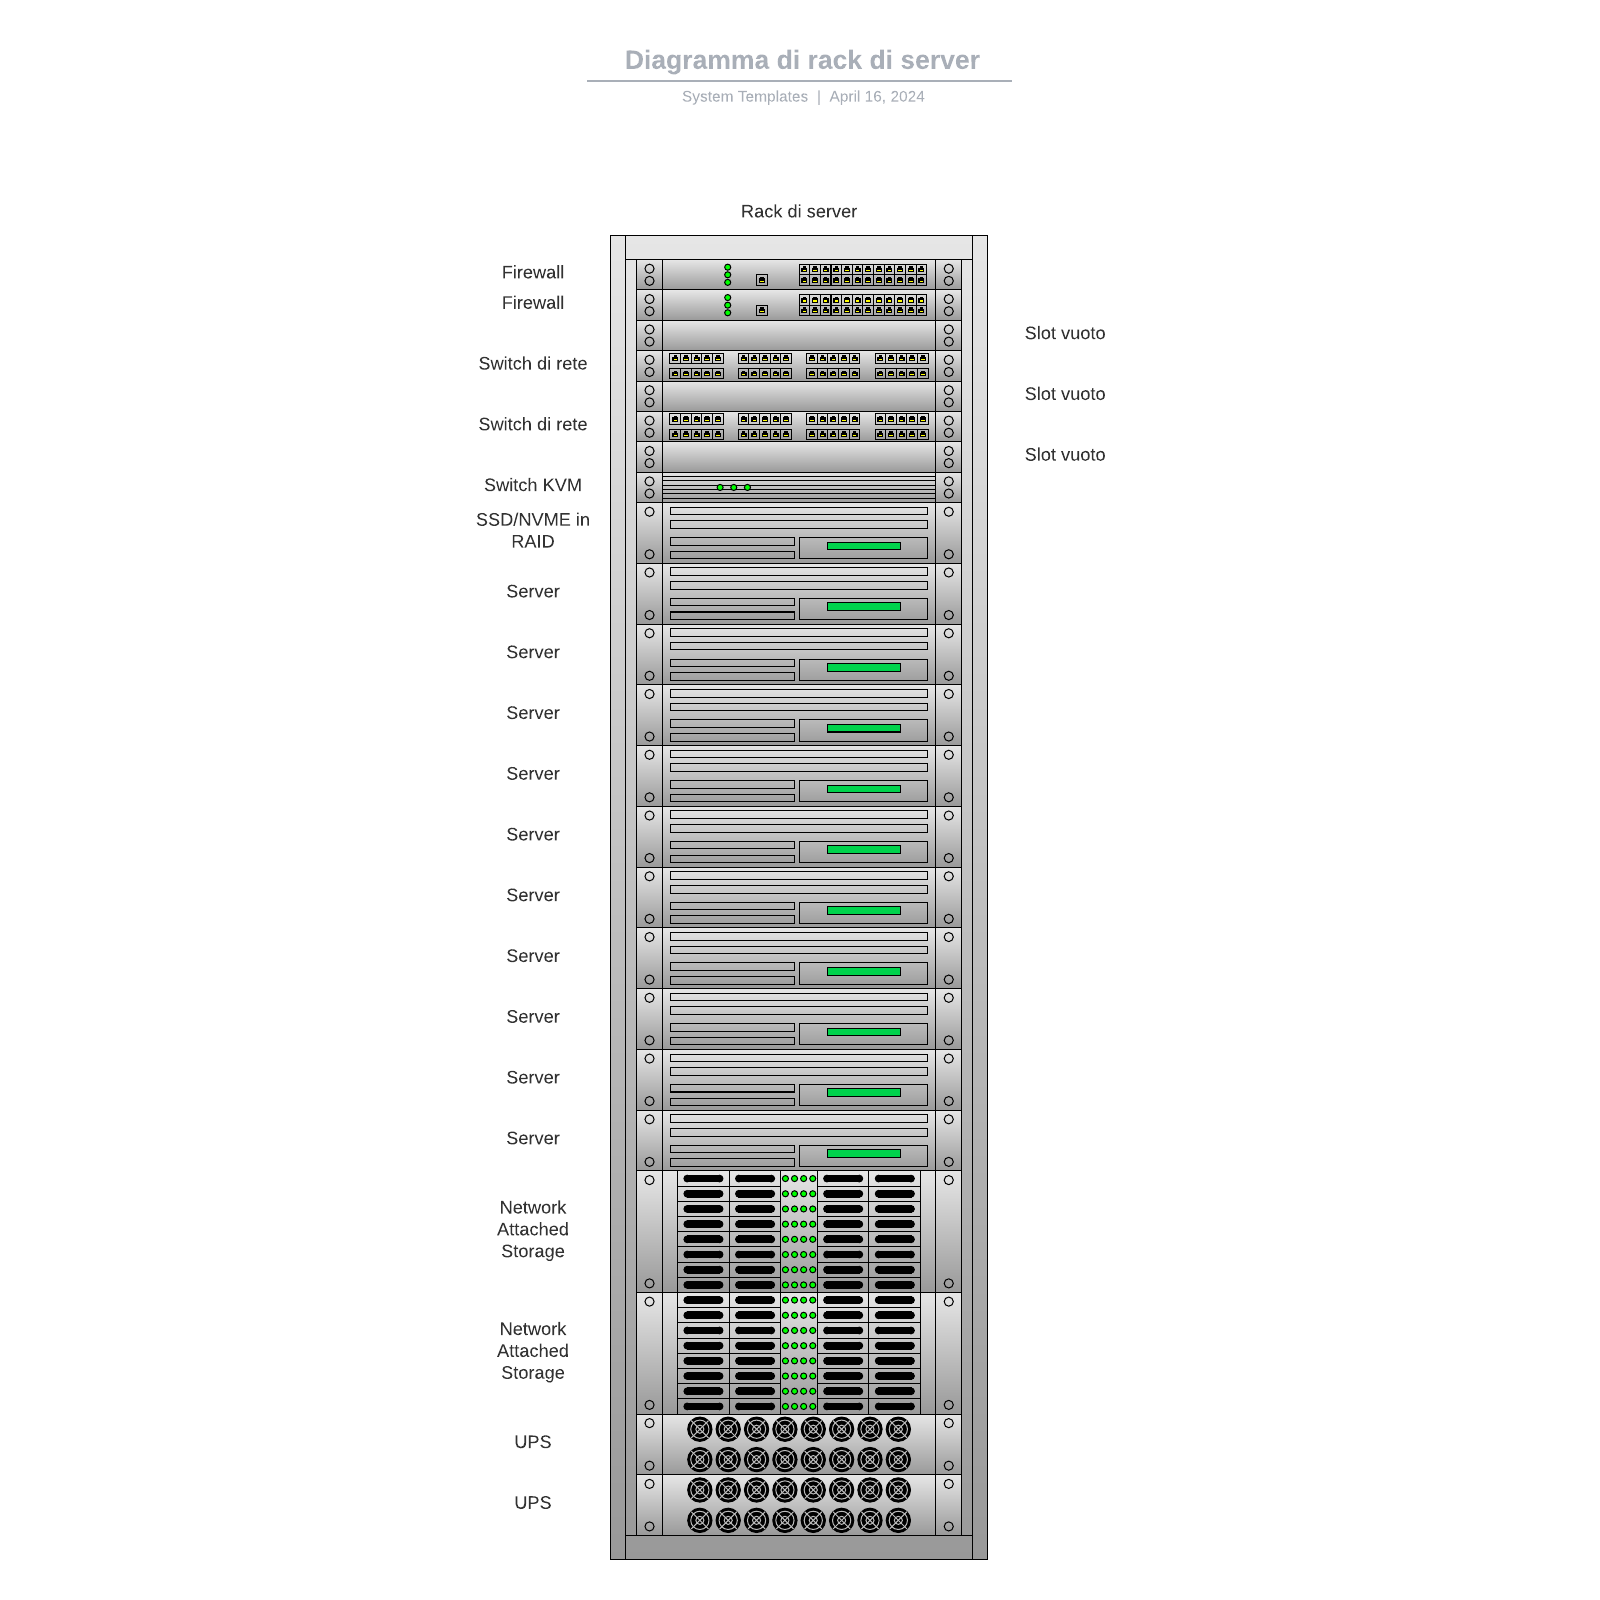 Diagramma di rack di server example